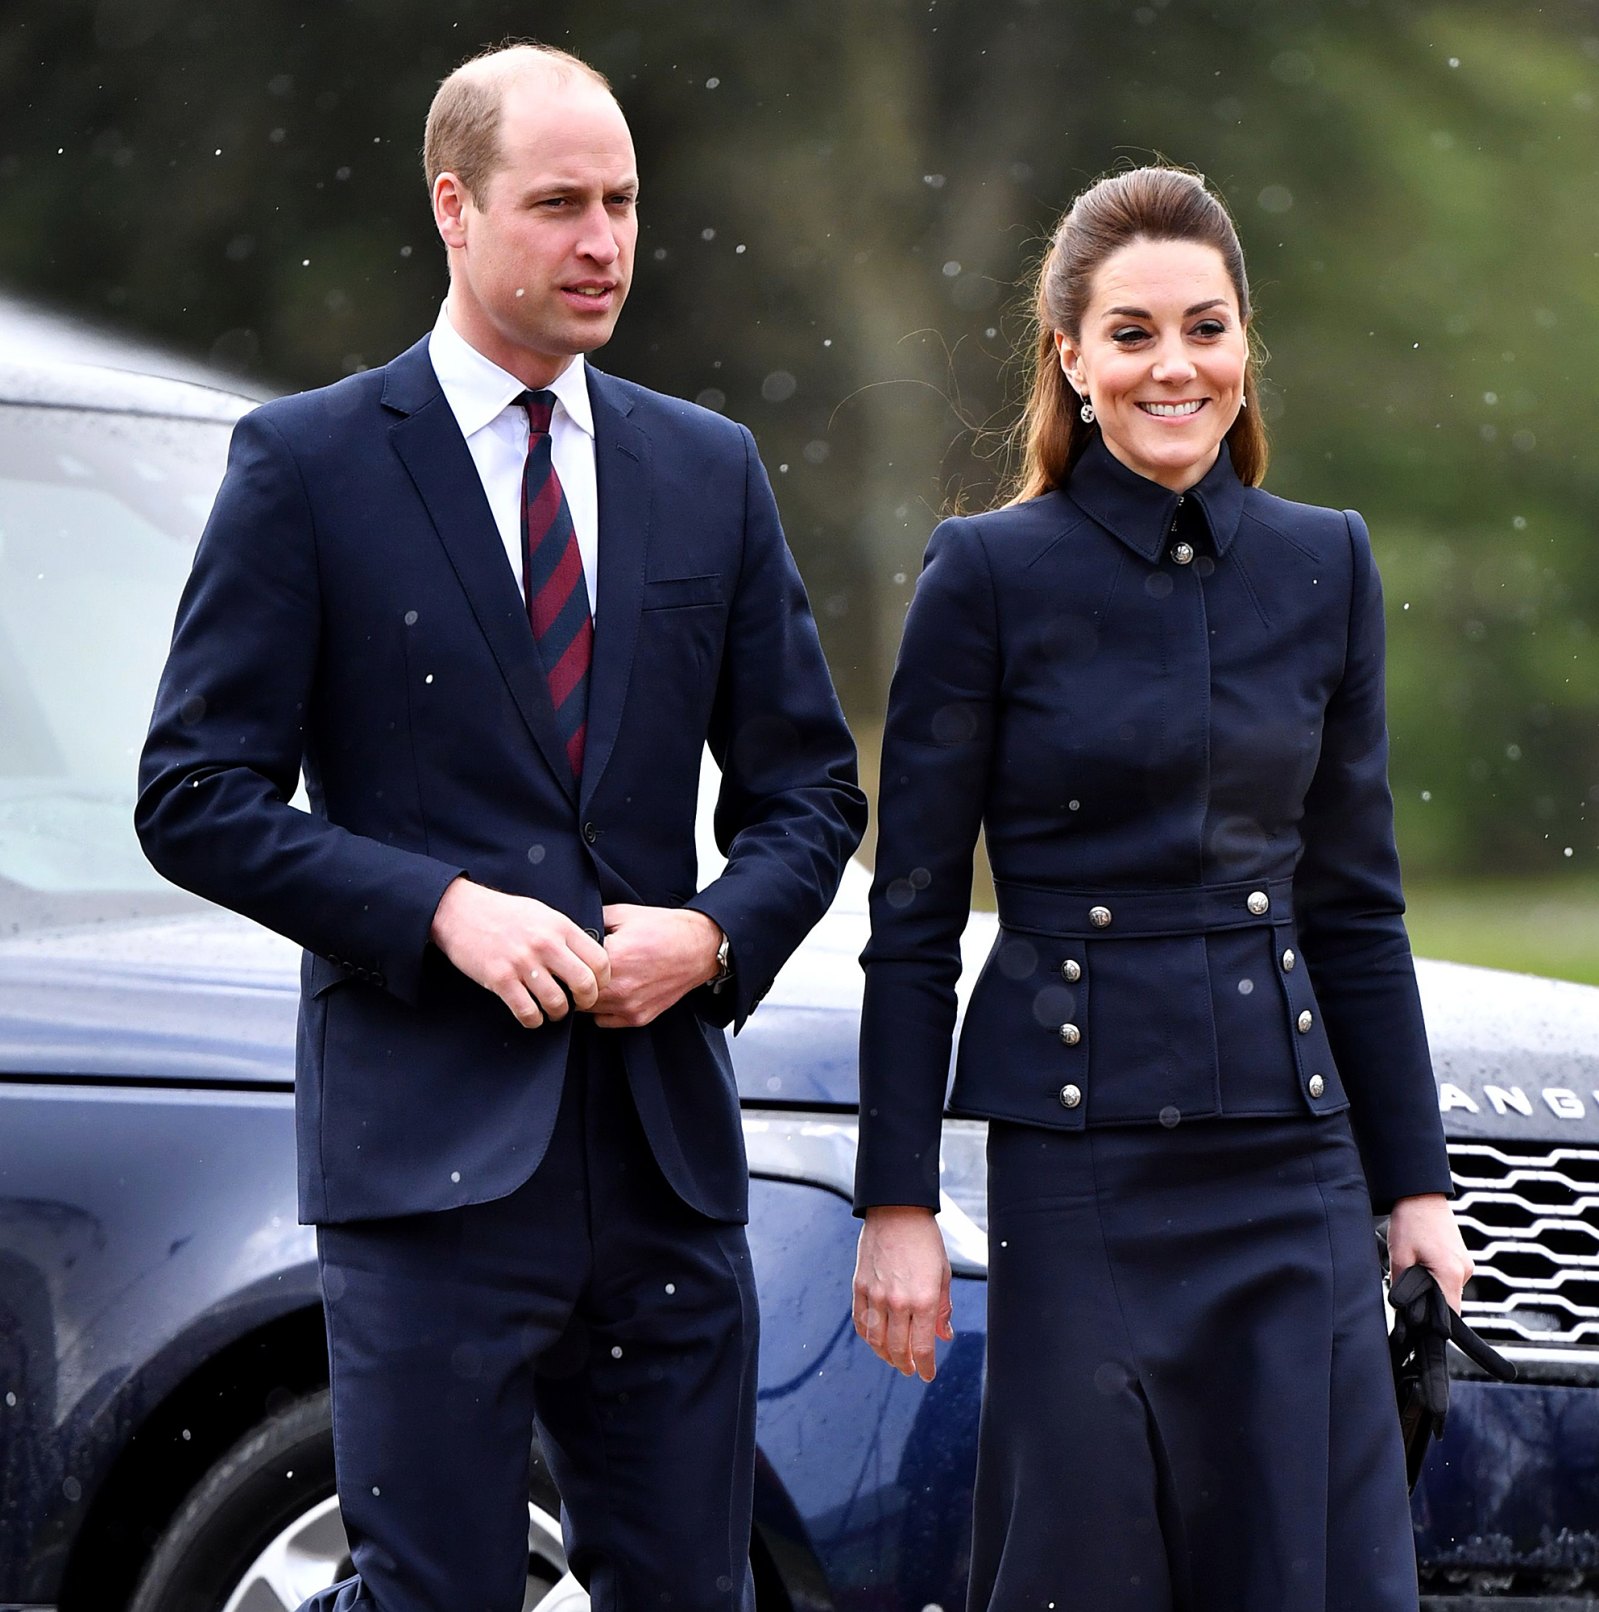 Prince William, Kate Middleton to Take Brief Break for Family Time | Us ...